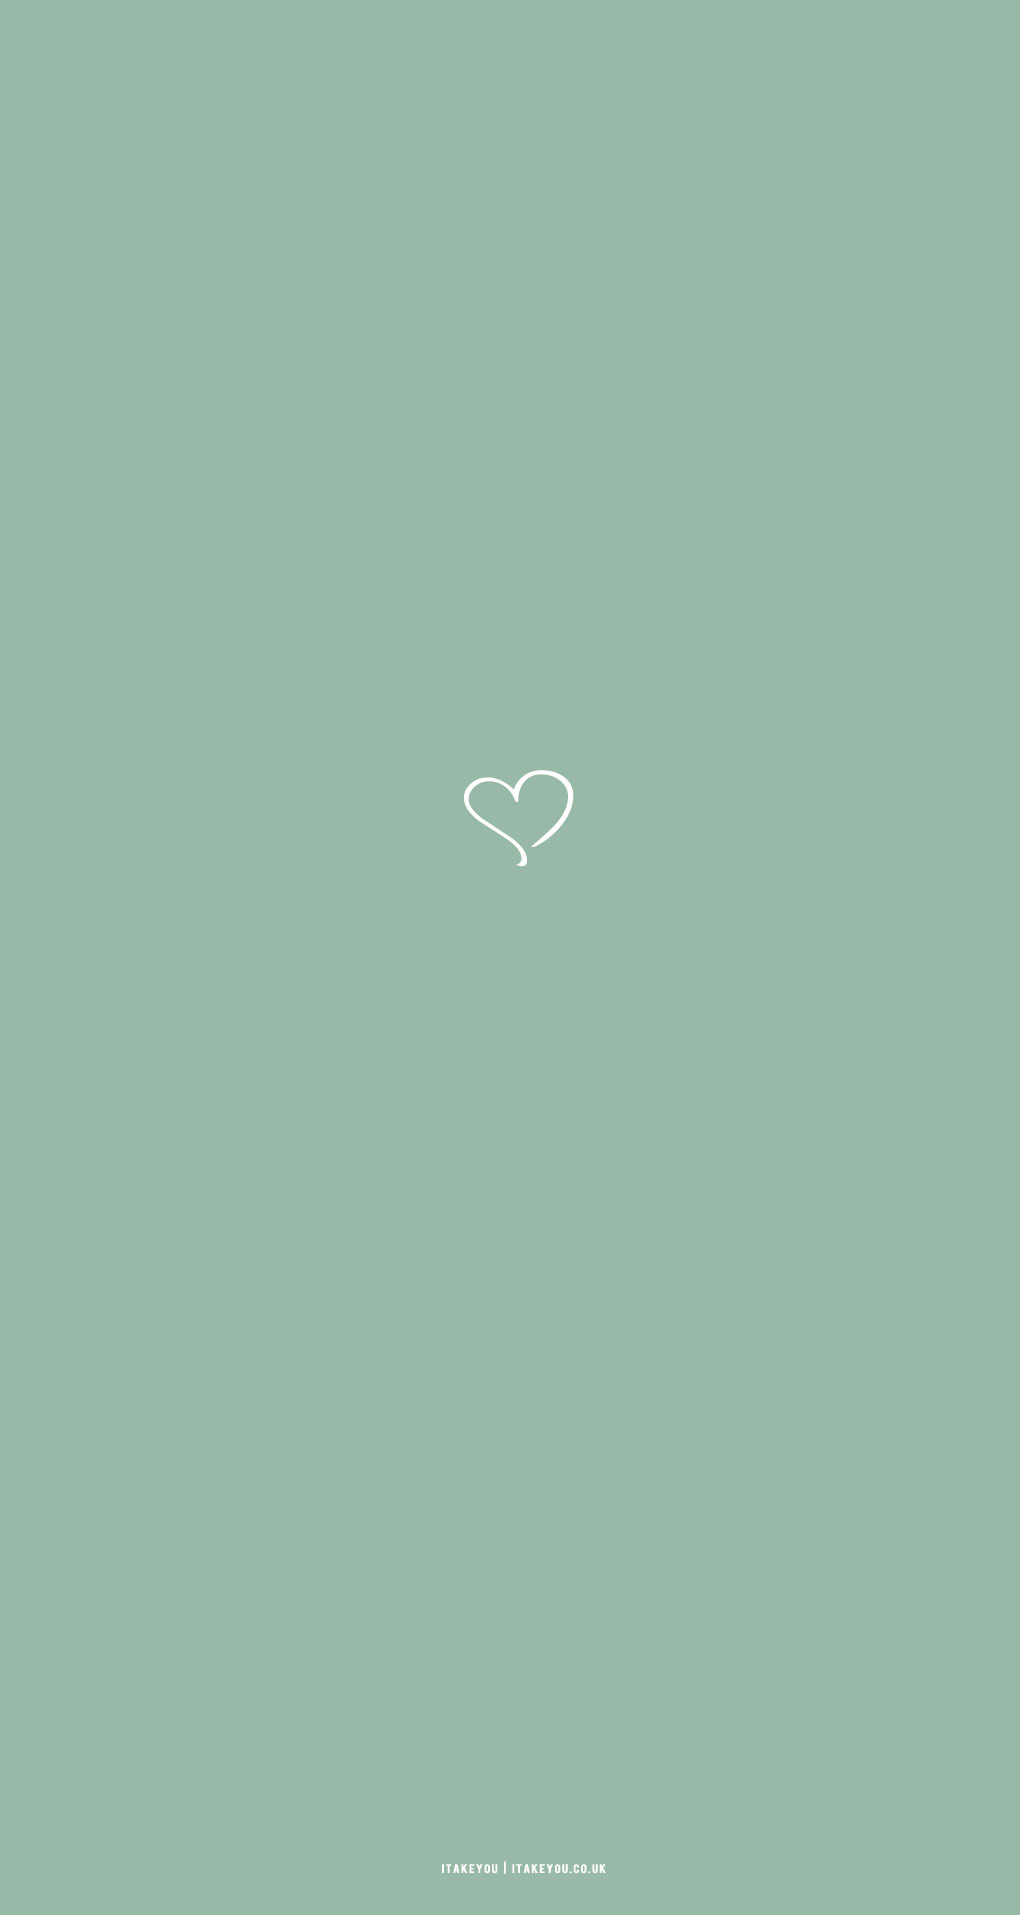 Sage Green Minimalist Wallpaper for Phone : Cute Heart I Take You. Wedding Readings. Wedding Ideas